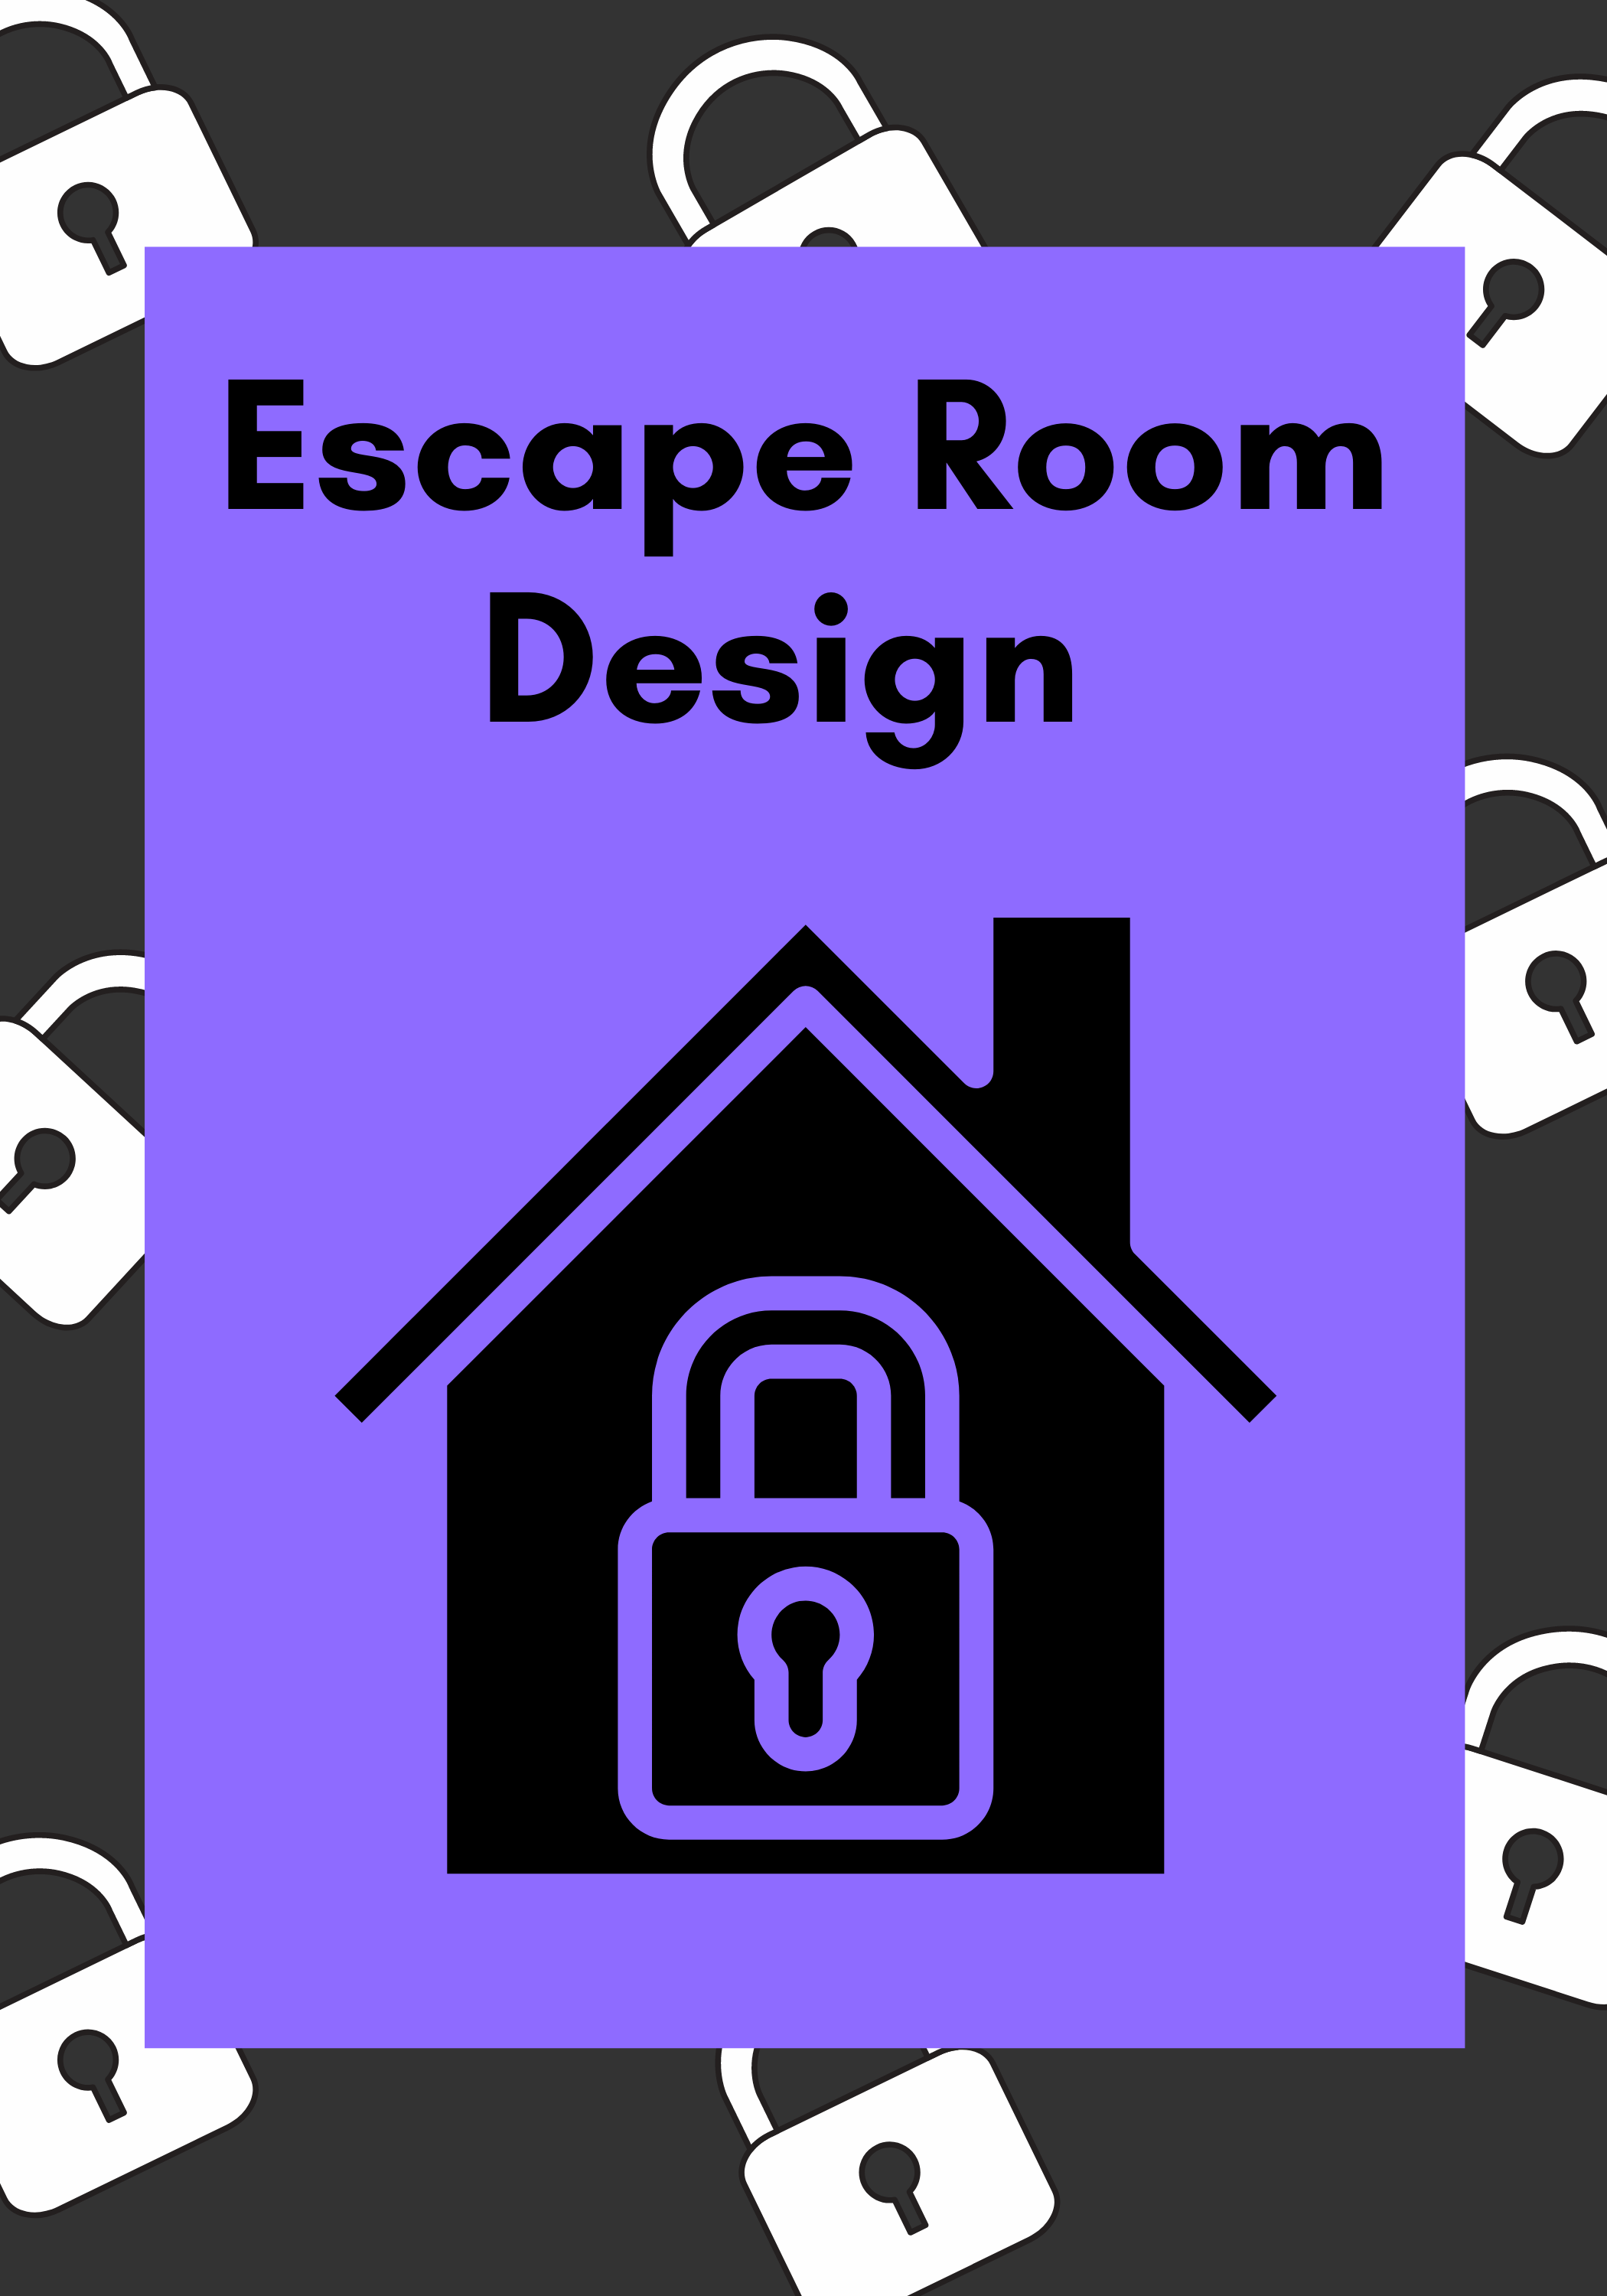 Escape Room Design Portsmouth Public Library